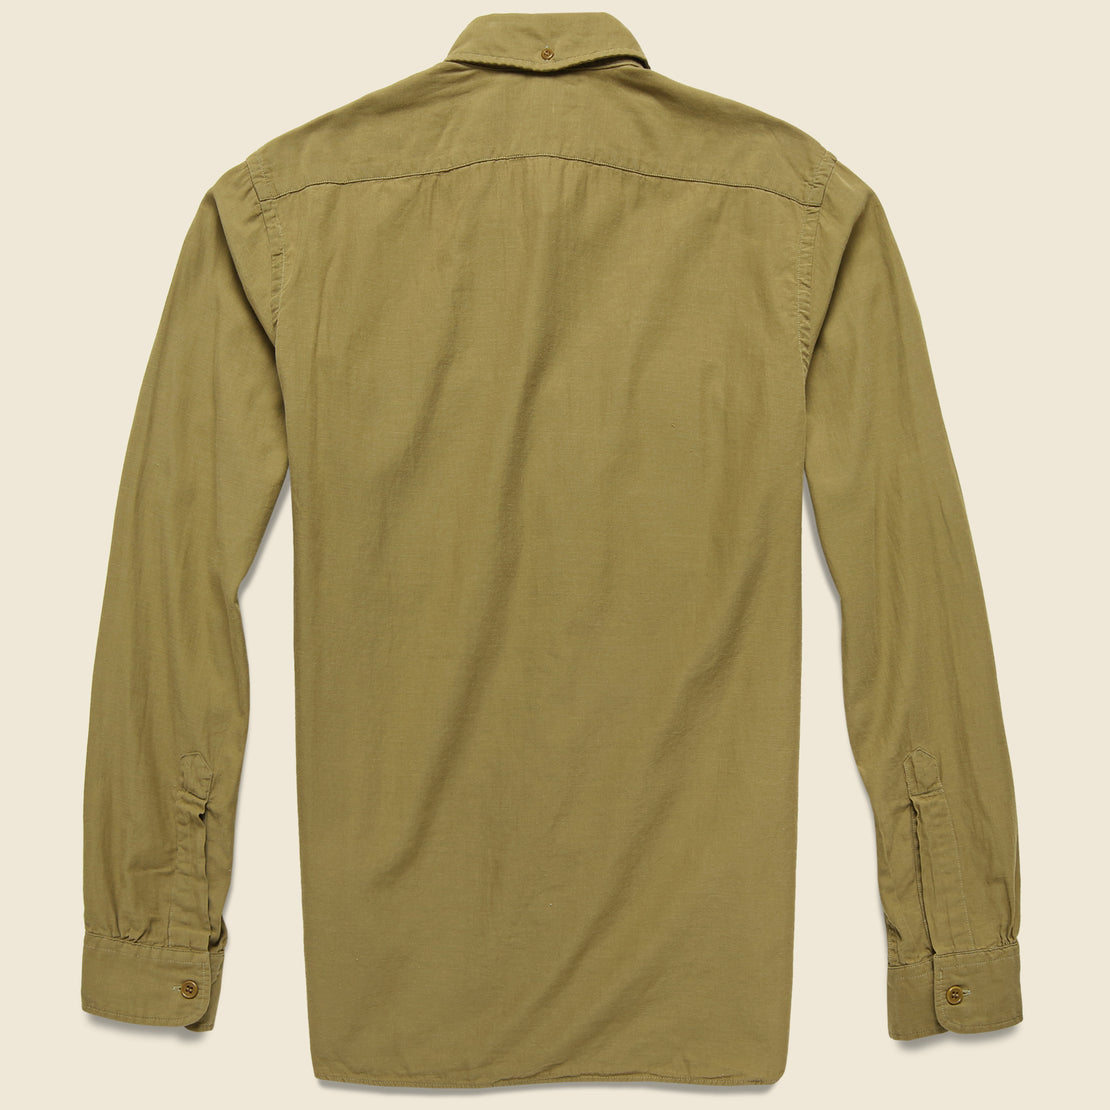 Clayton Sateen Military Shirt - Desert Tan